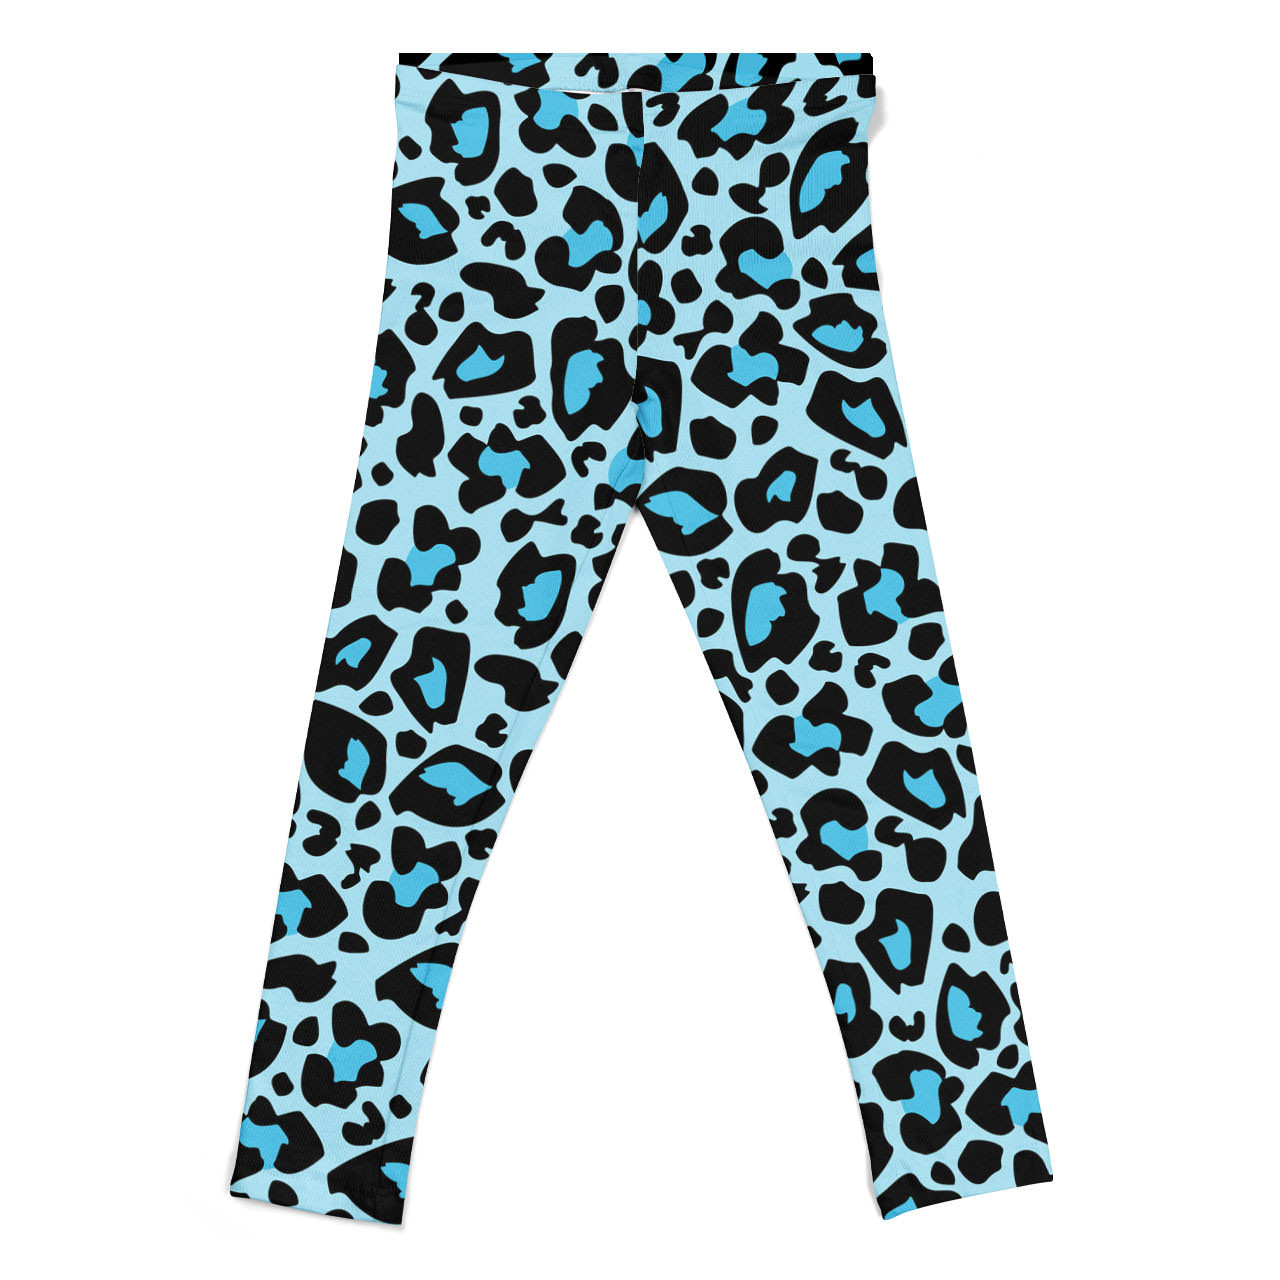 Blue leopard patterns leggings